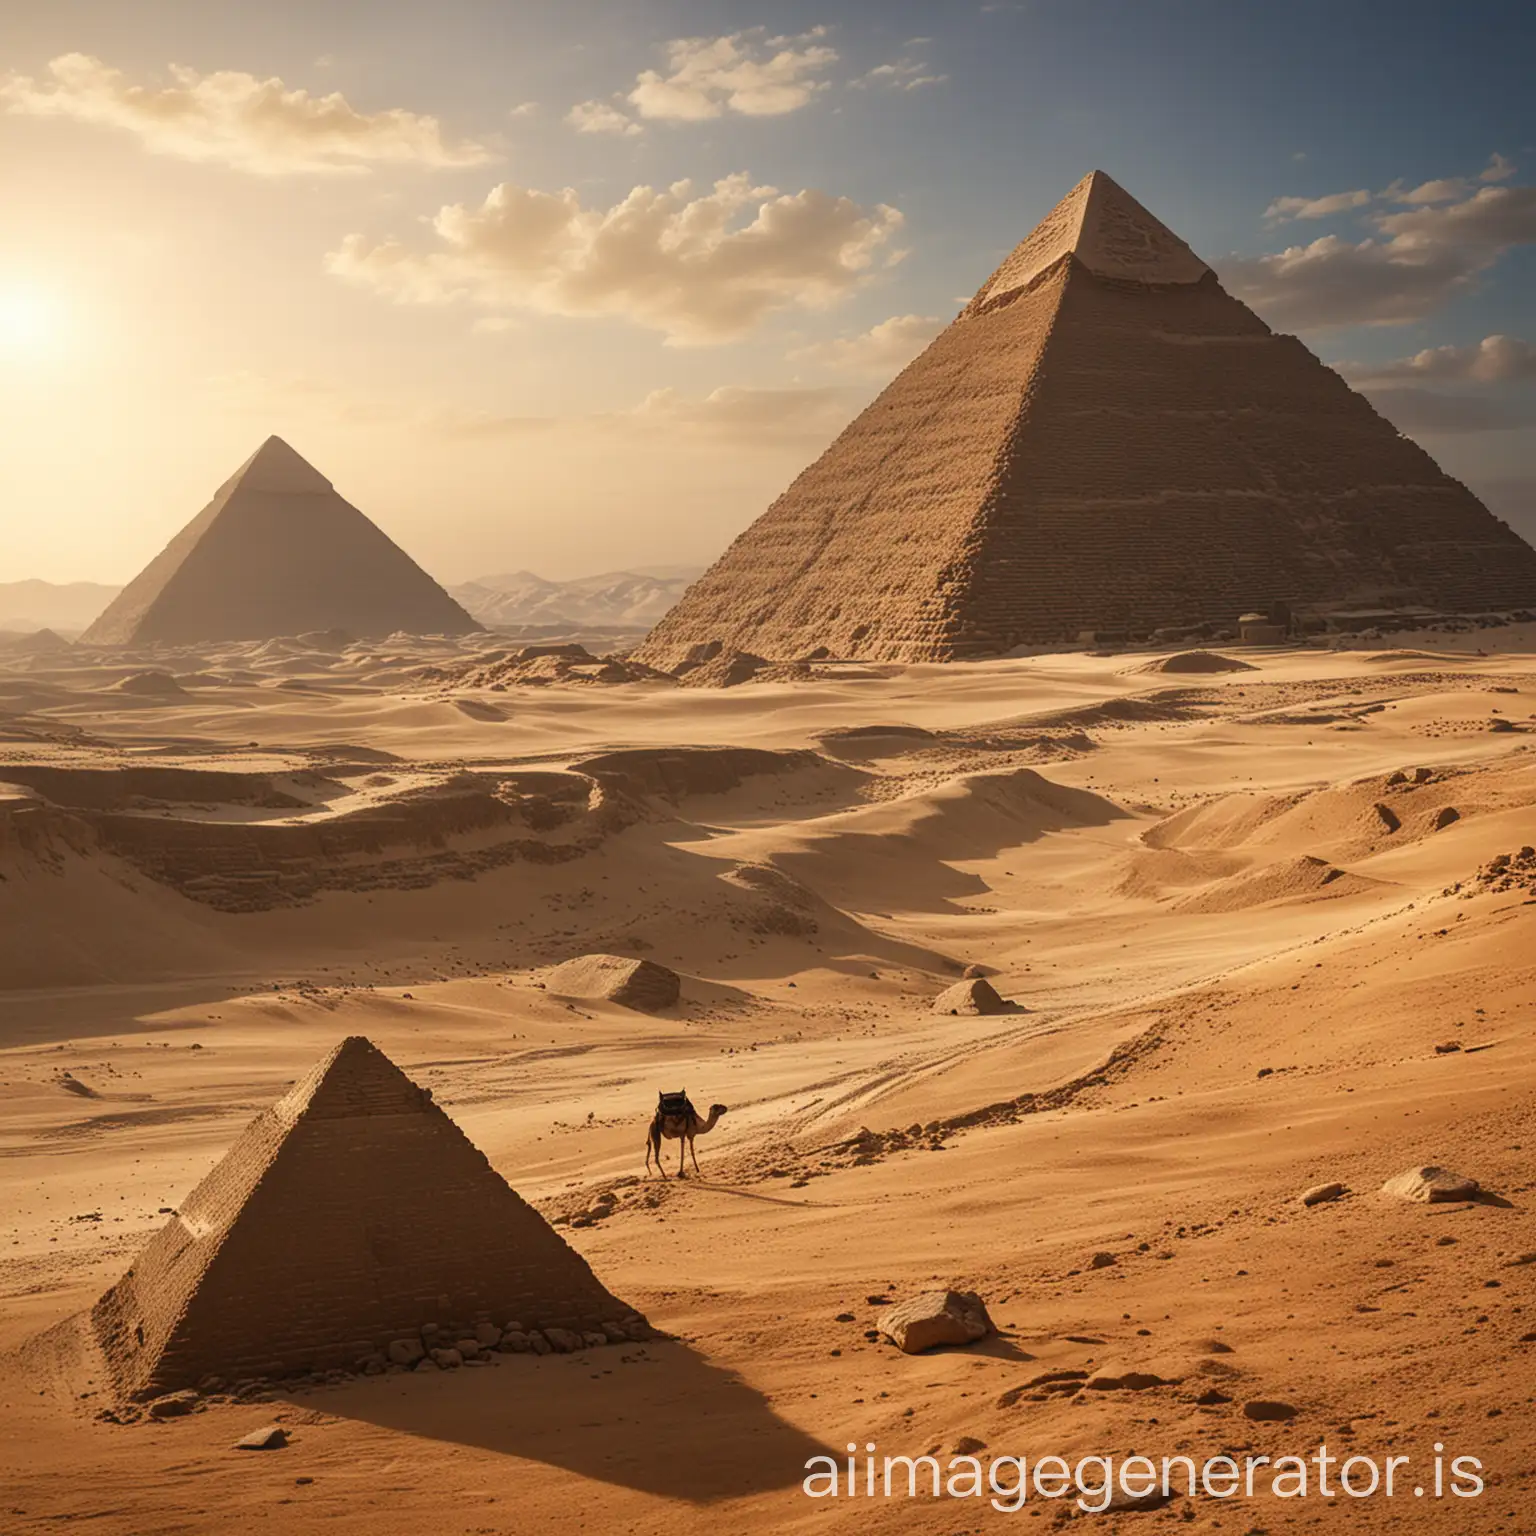 Majestic-Ancient-Pyramids-in-Desert-Oasis-Timeless-Wonder-and-Grandeur